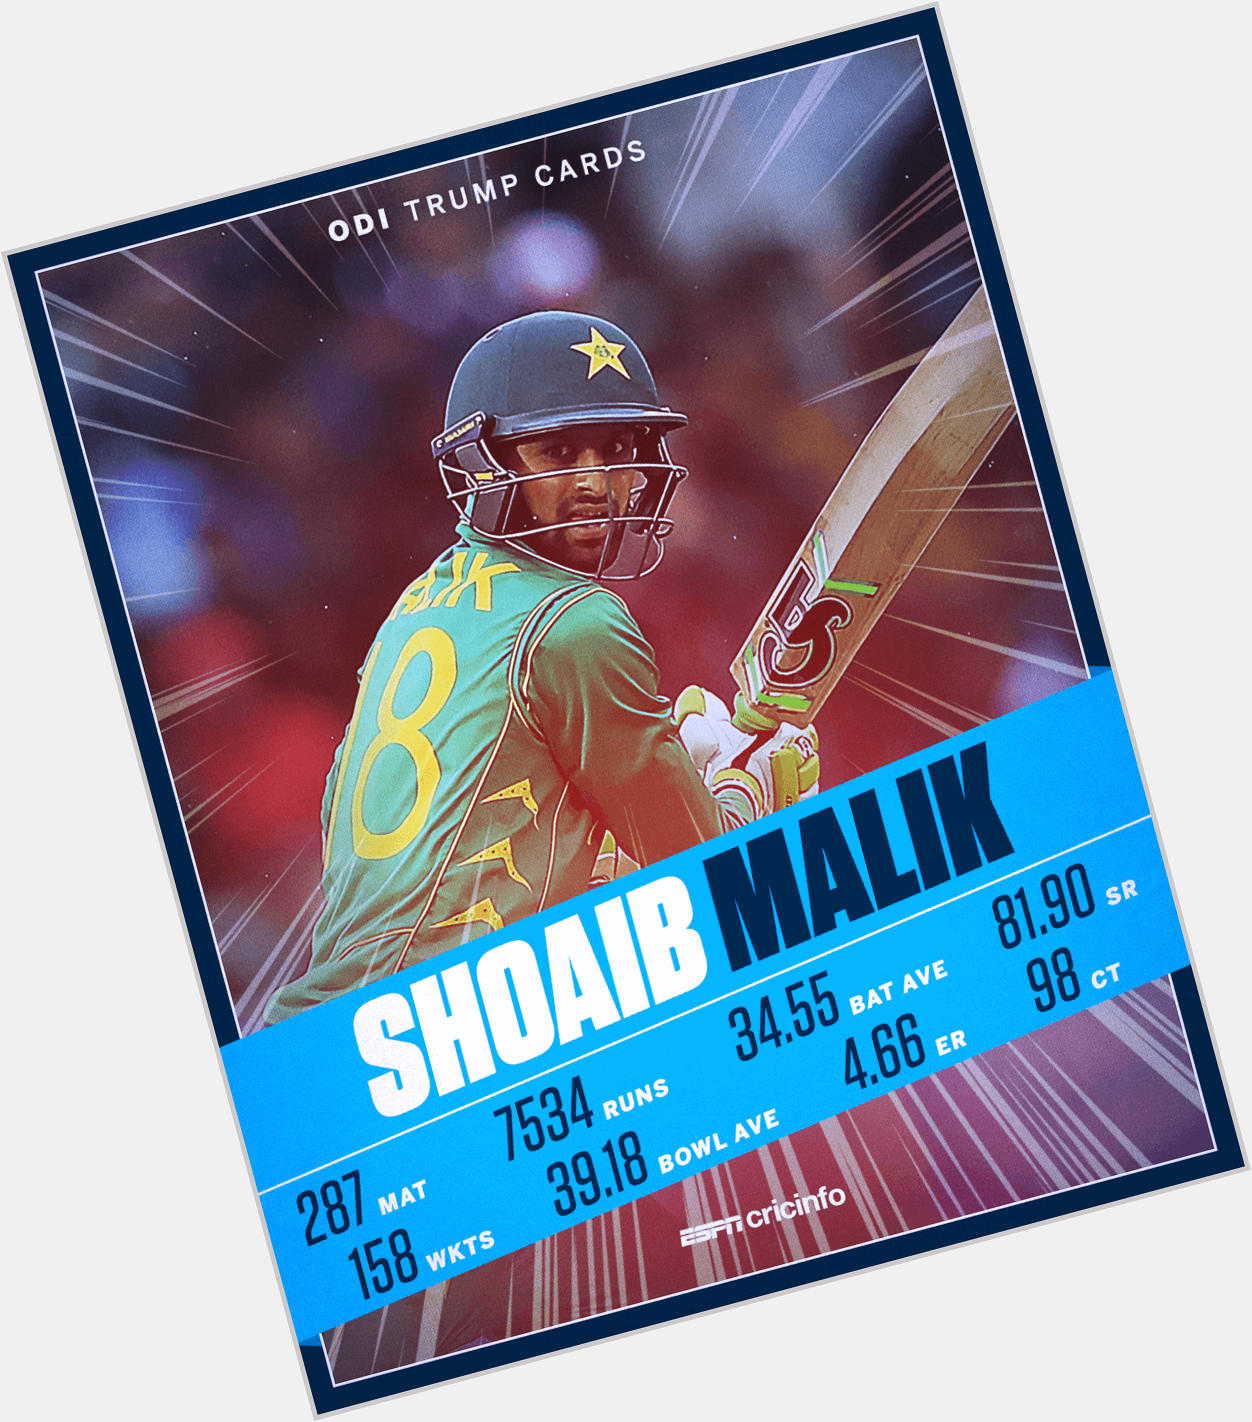 Happy birthday, Shoaib Malik! 